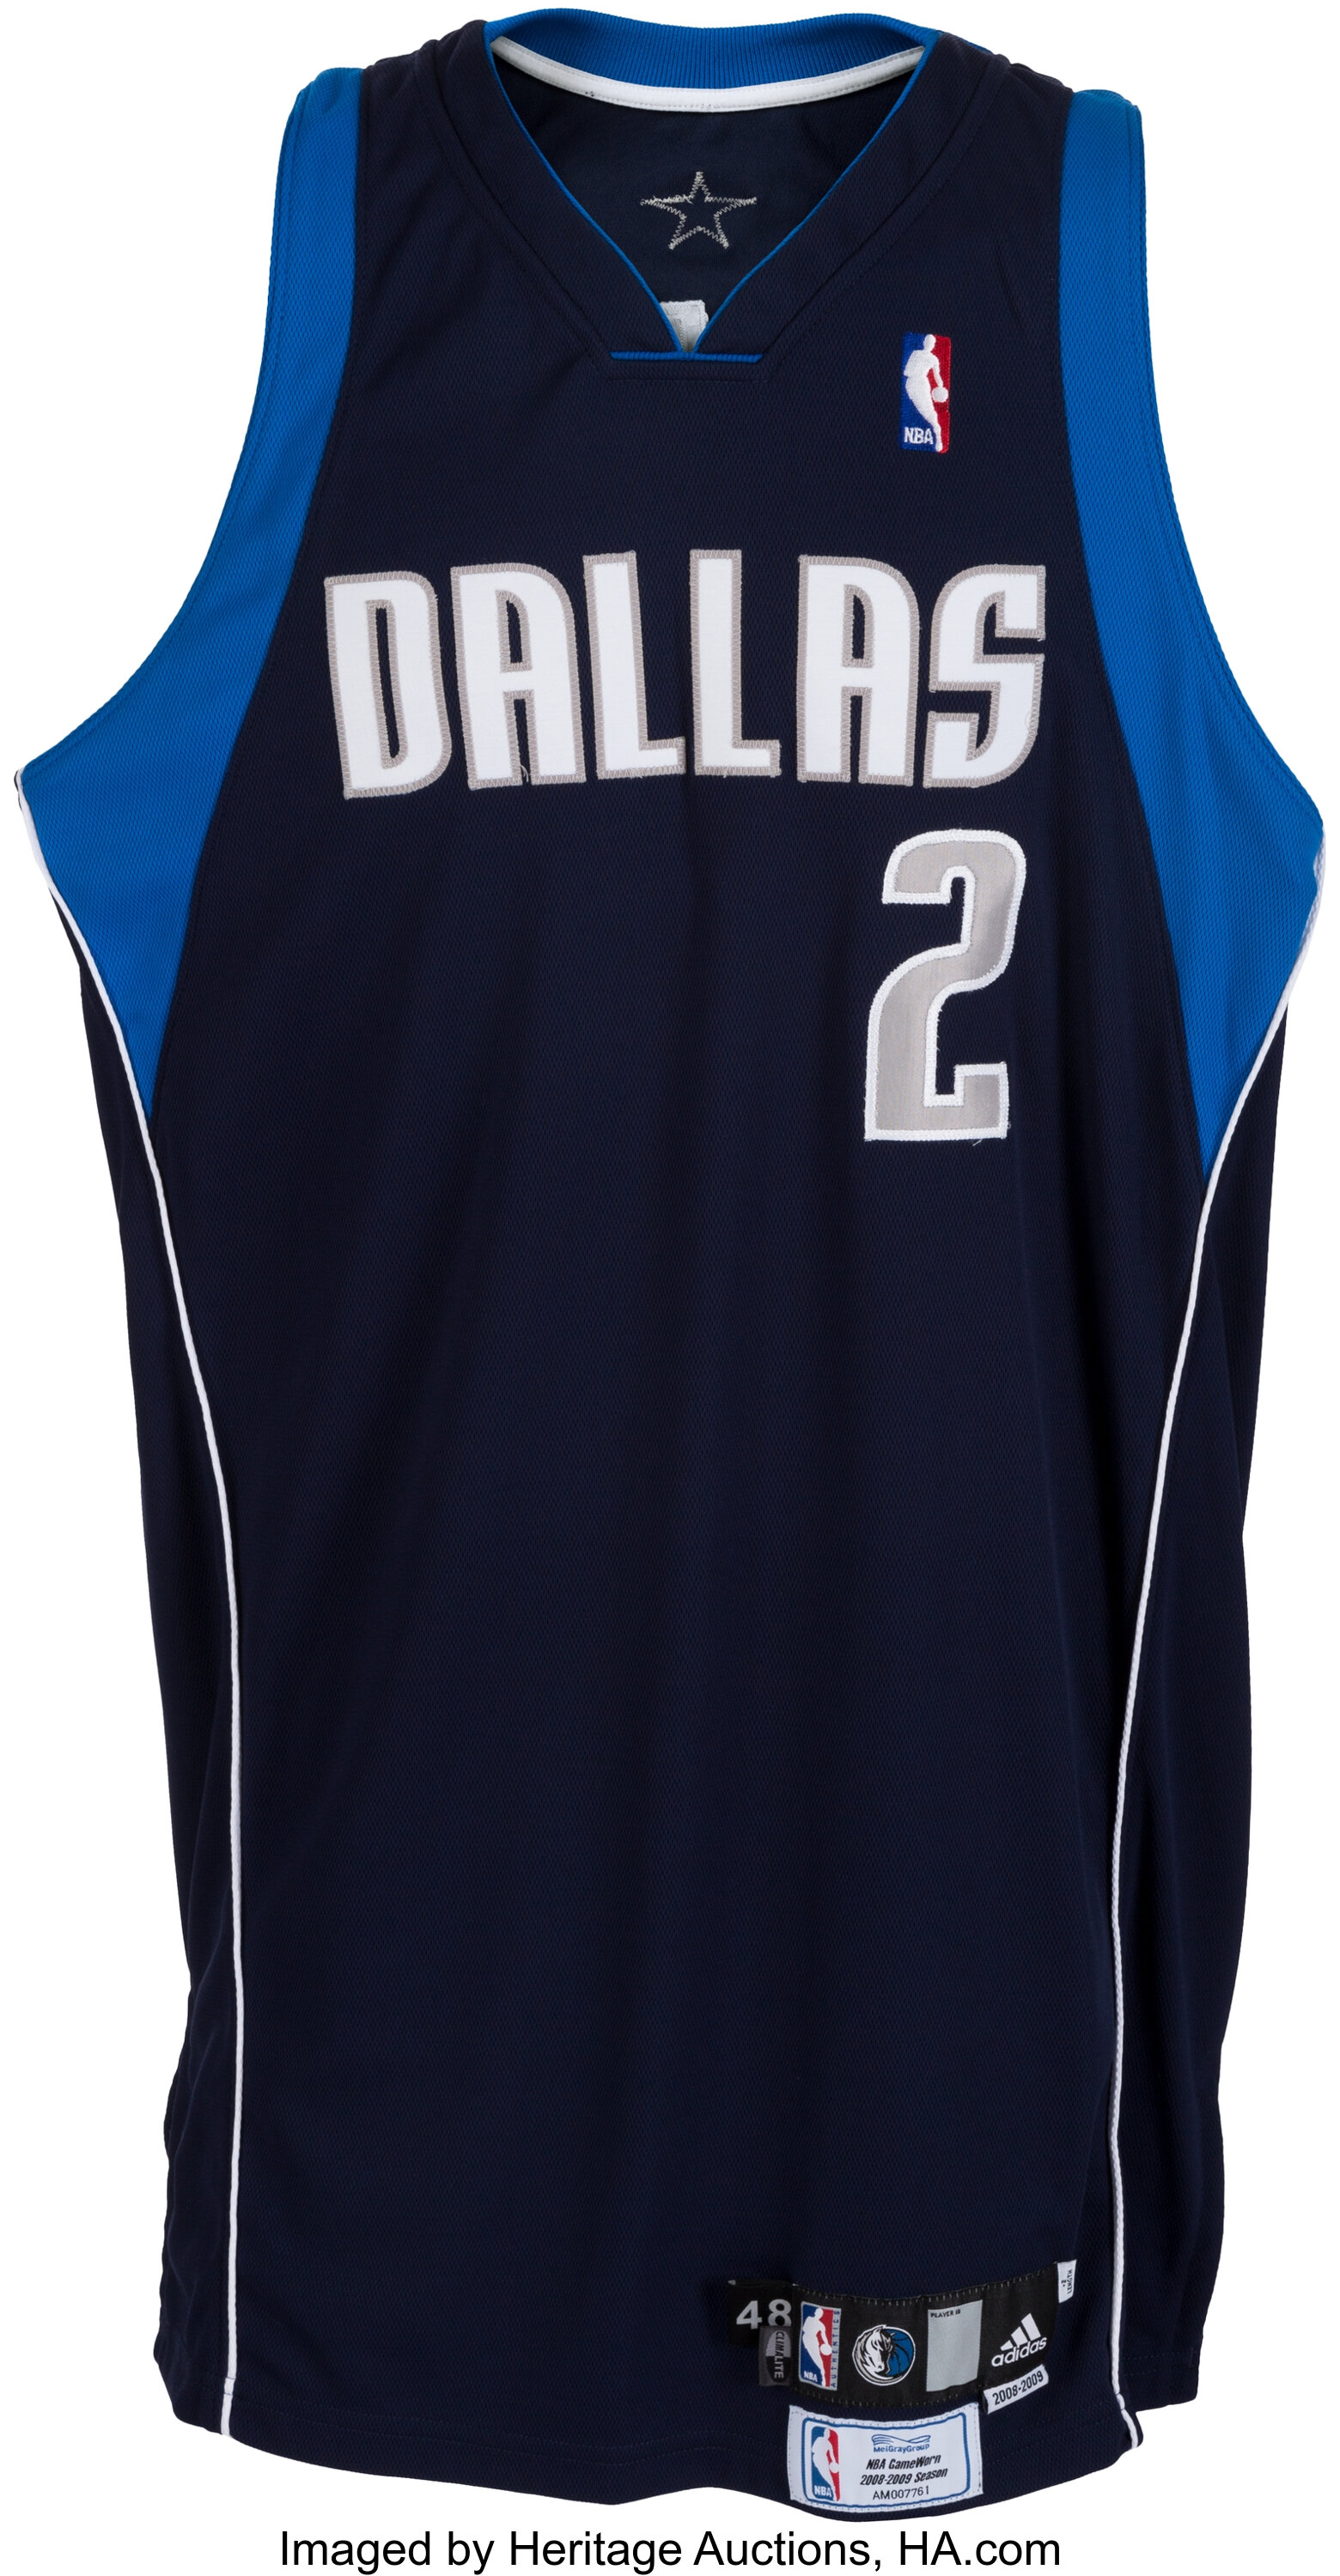 2008-09 Jason Kidd Game Worn Dallas Mavericks Jersey - With